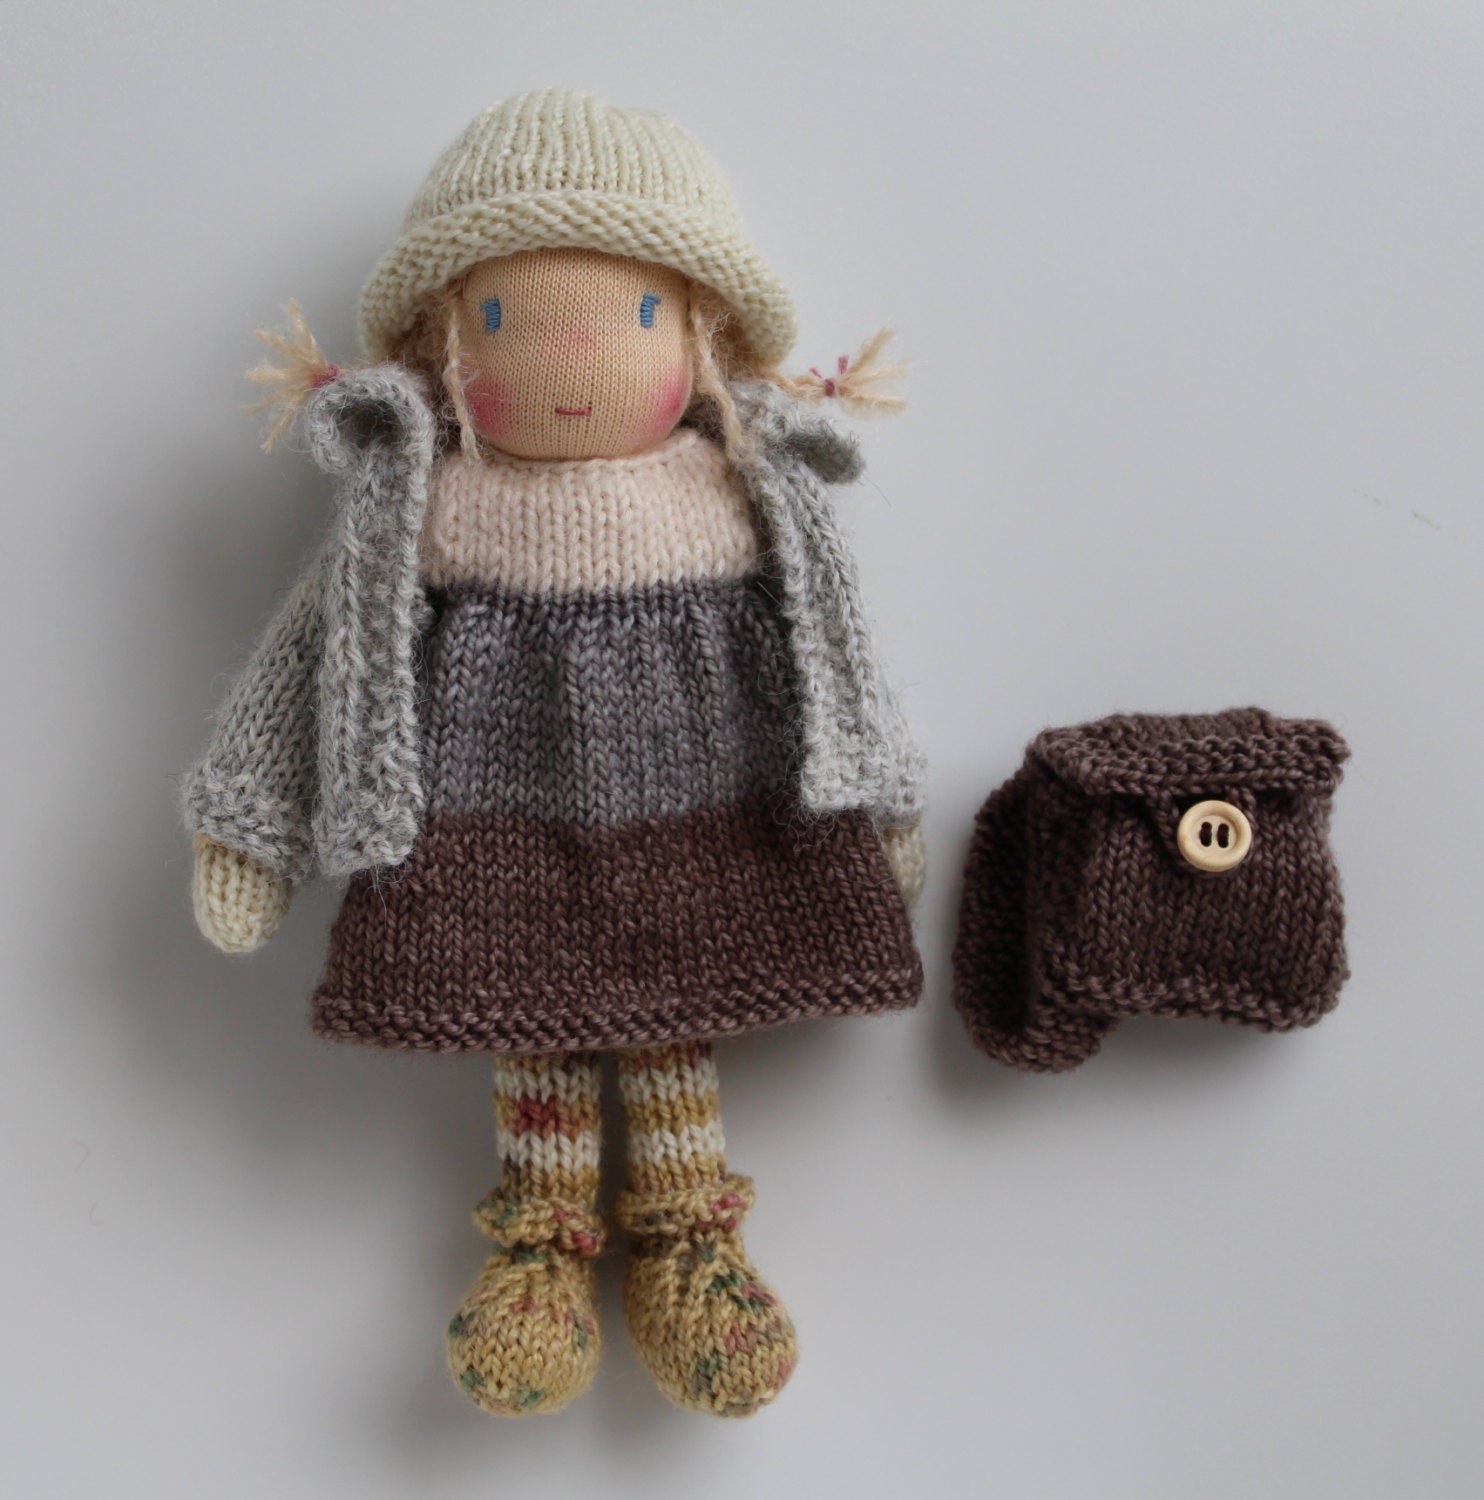 Waldorf doll Waldorf knitted doll 8 Jill by Toddledolls on Etsy